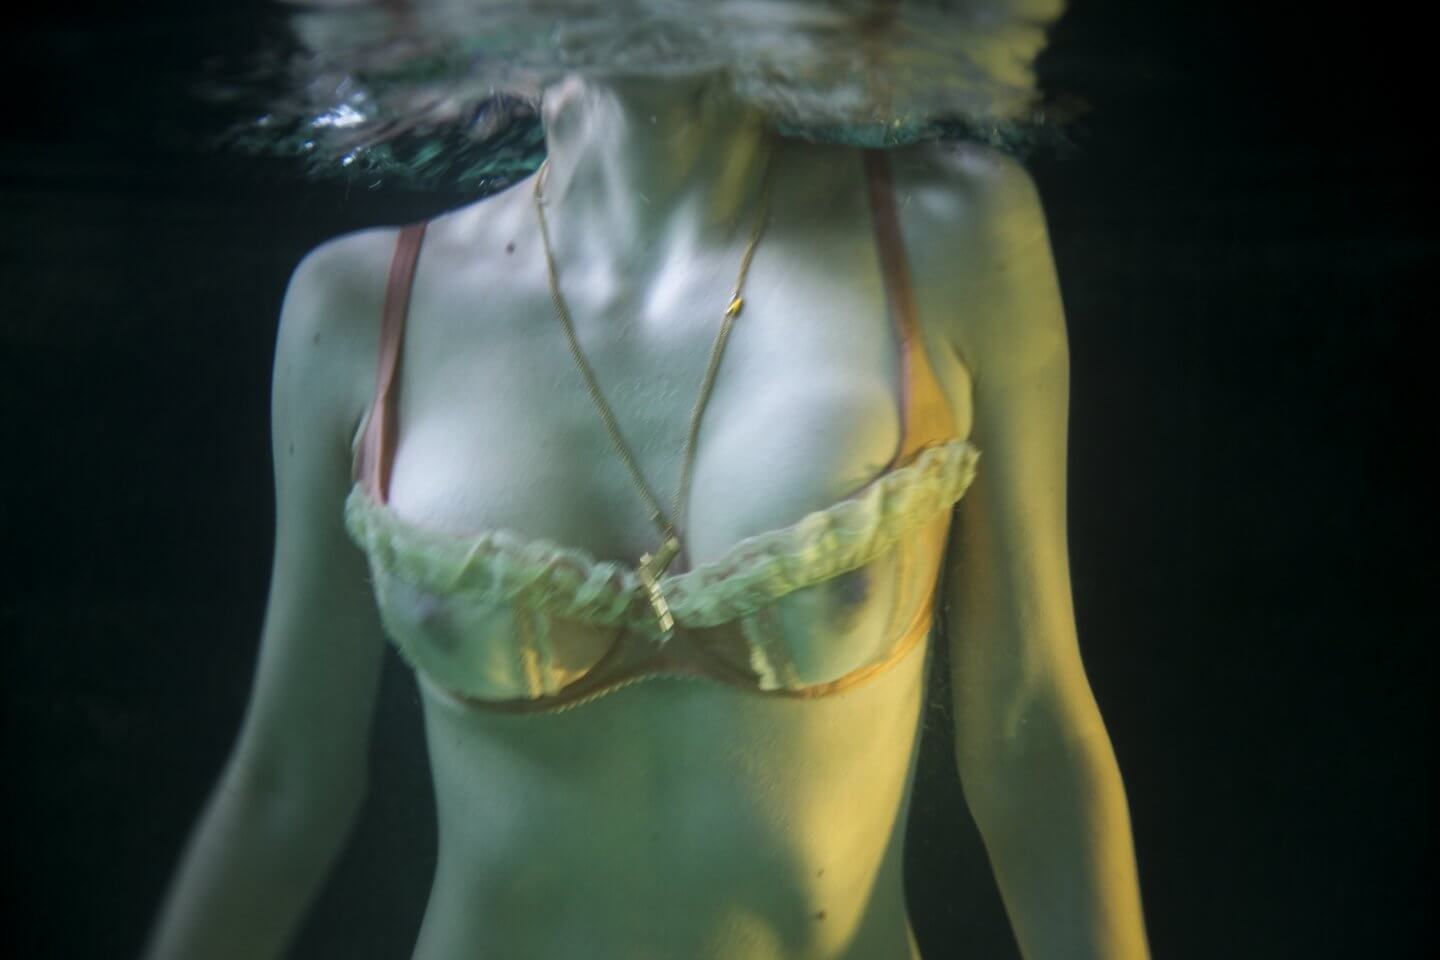 Galerie Benjamin Eck München Underwater Photography
C-Print mounted on Alu-Dibond